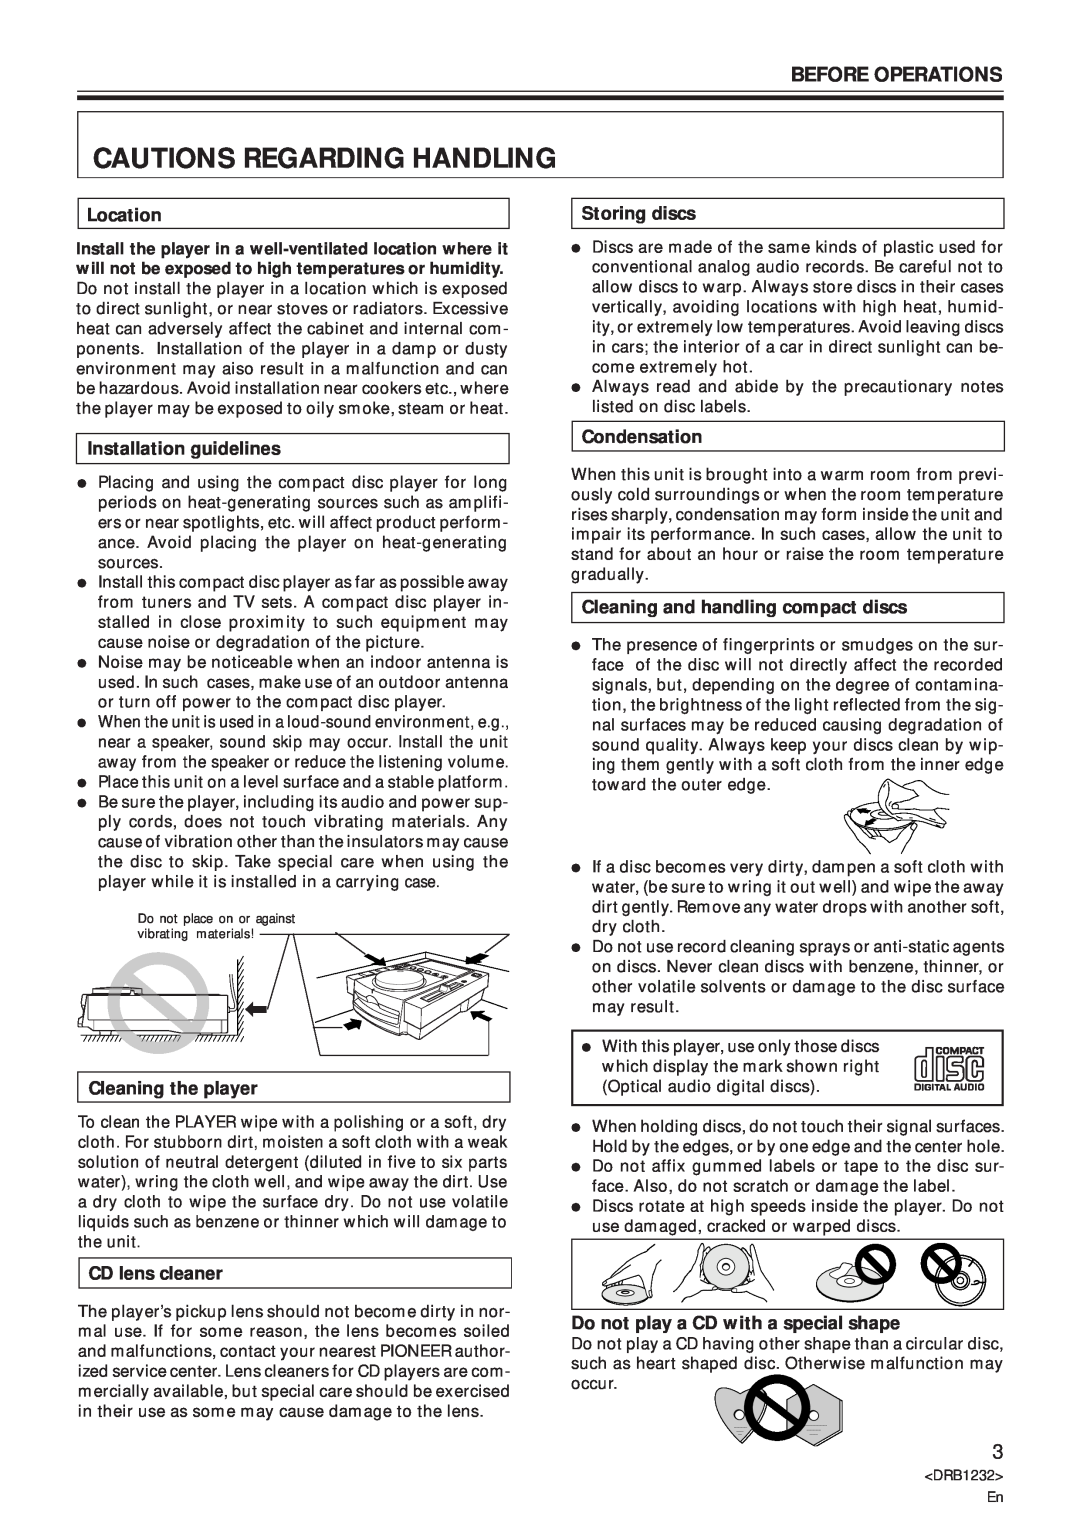 Pioneer CDJ-100S Cautions Regarding Handling, Before Operations, Location, Storing discs, Installation guidelines 